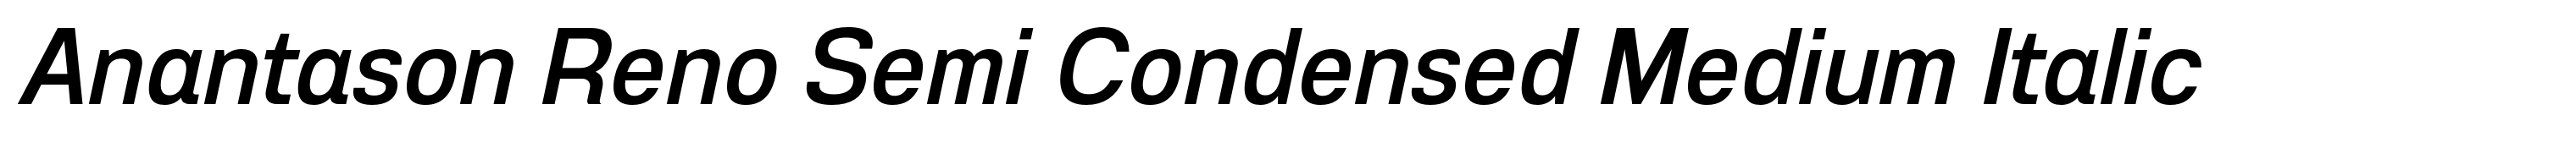 Anantason Reno Semi Condensed Medium Italic